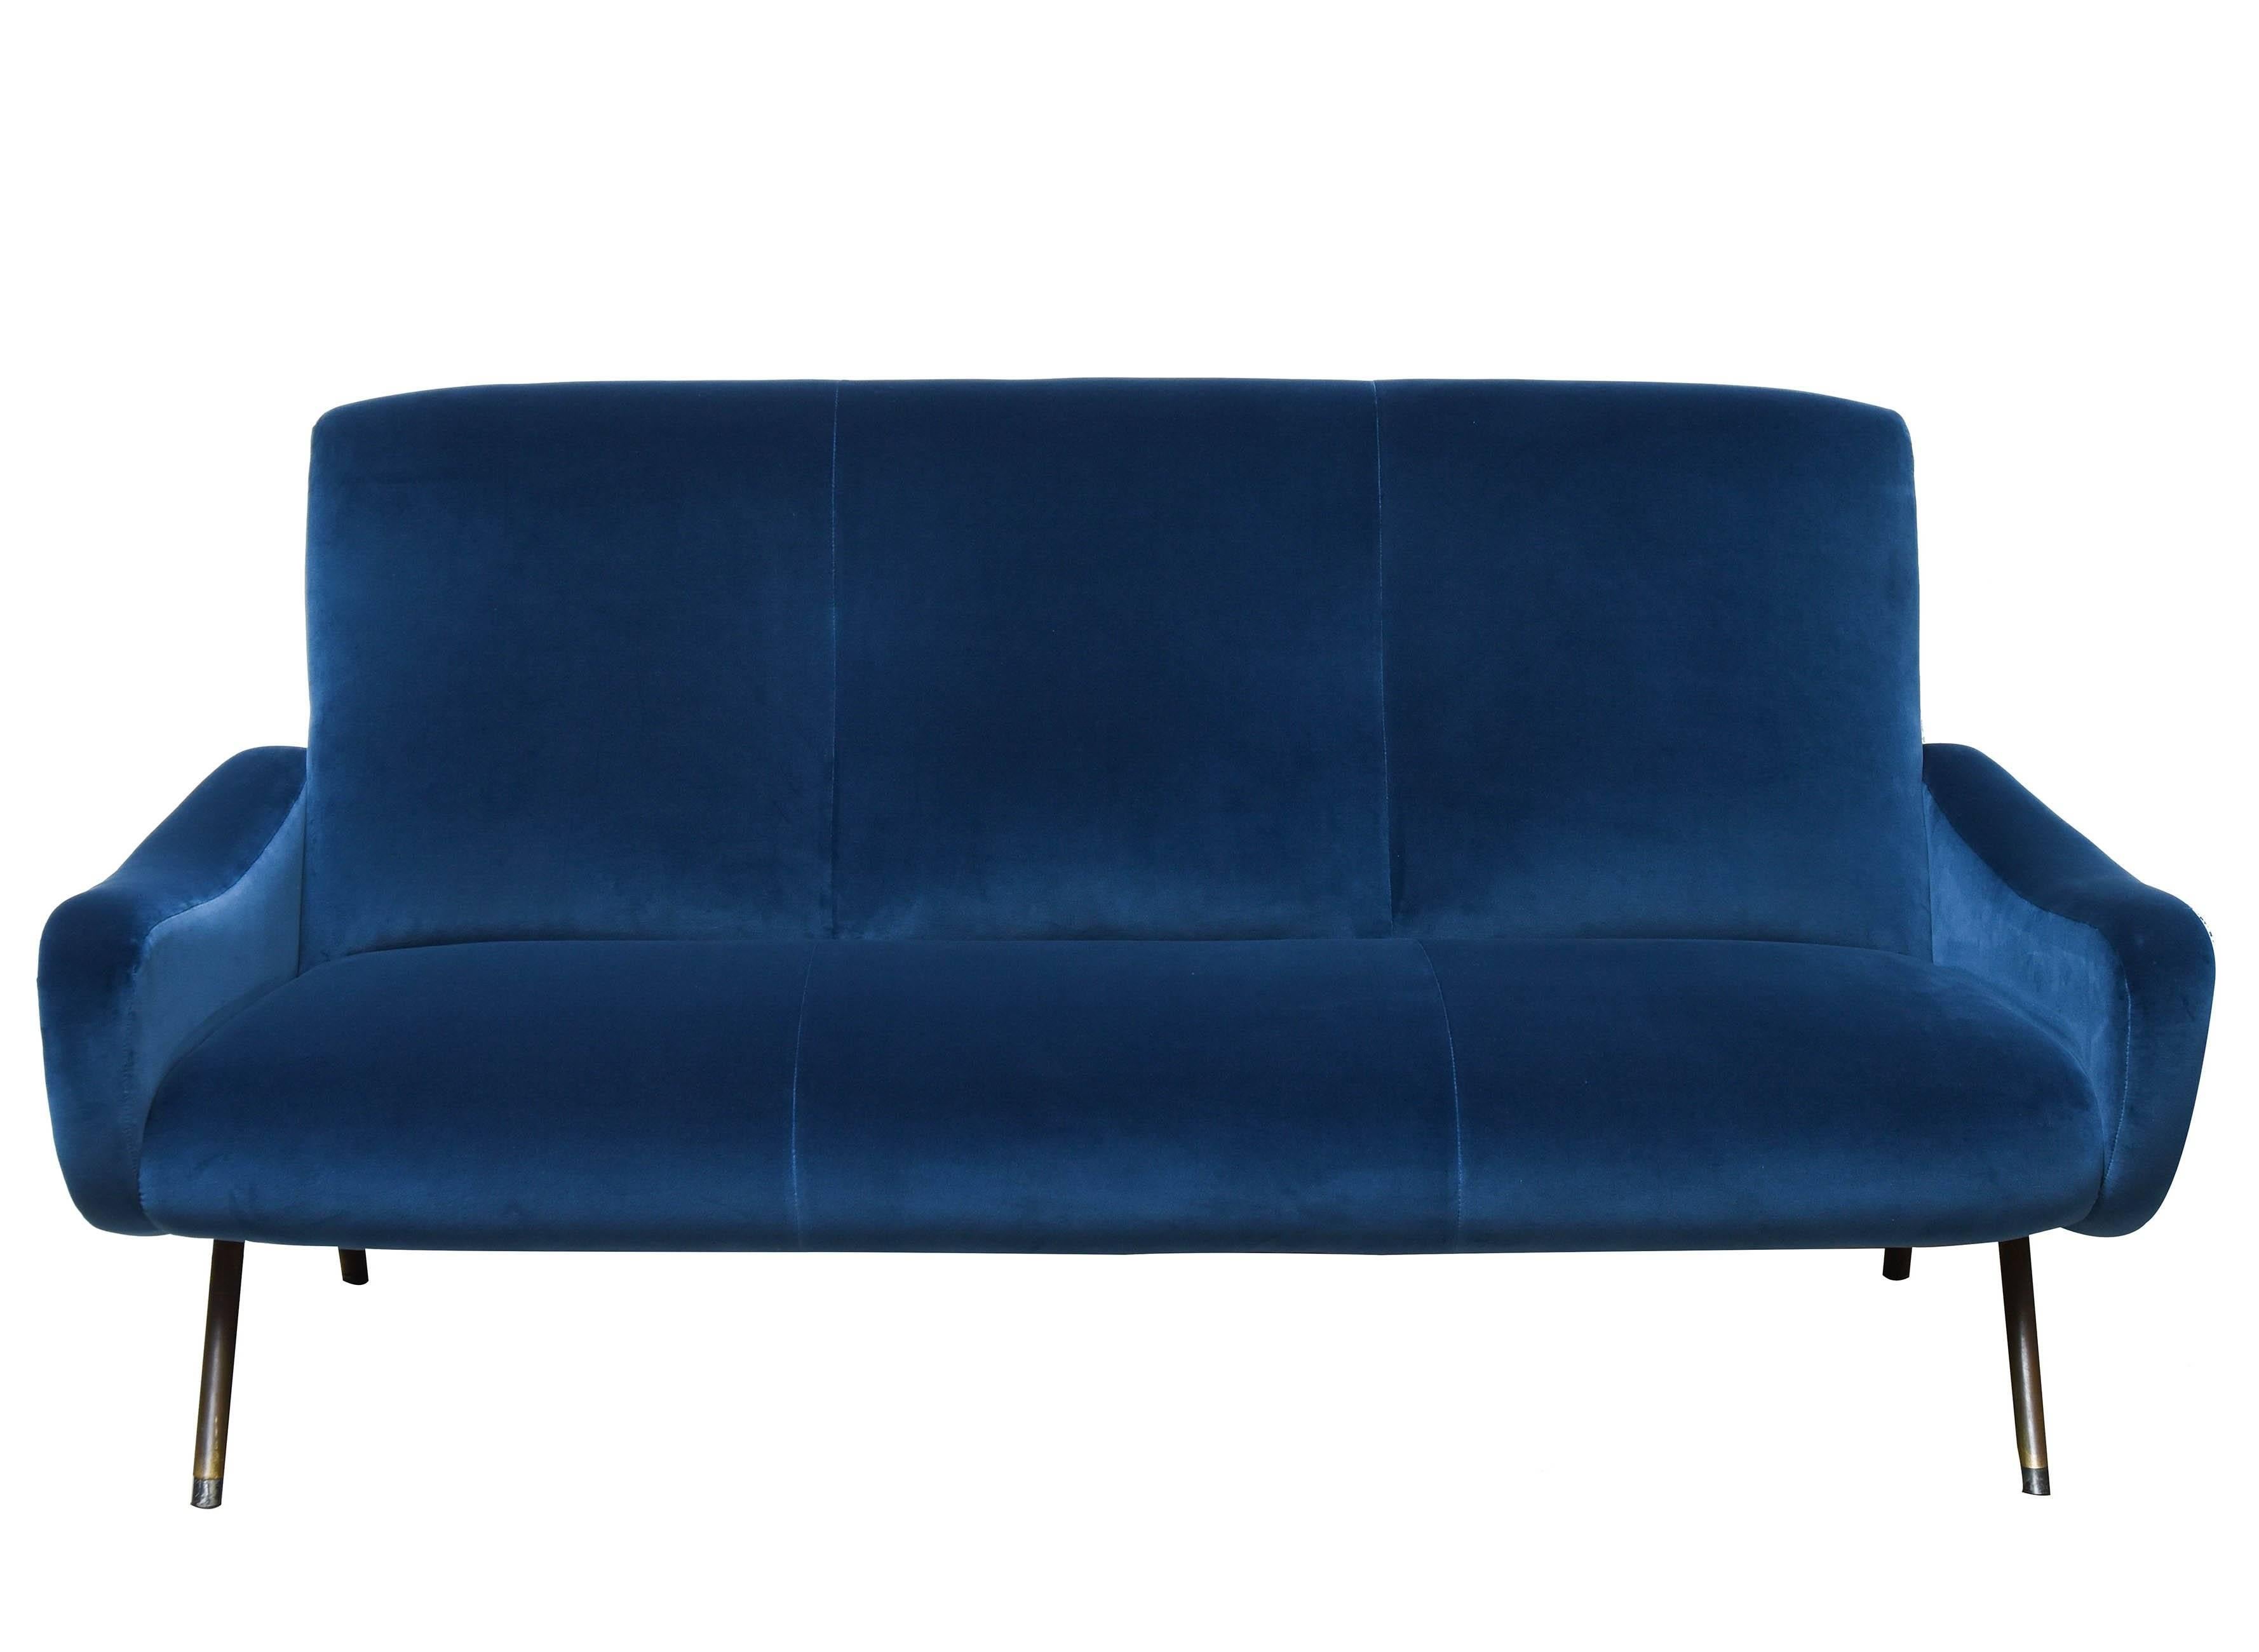 Marco Zanuso “Lady” series sofa.
Metal structure. Blue velvet upholstery.
Produced by Arflex.
Italy, 1950s.
Measures: H cm. 90/45, L cm. 175, P cm. 75.
 